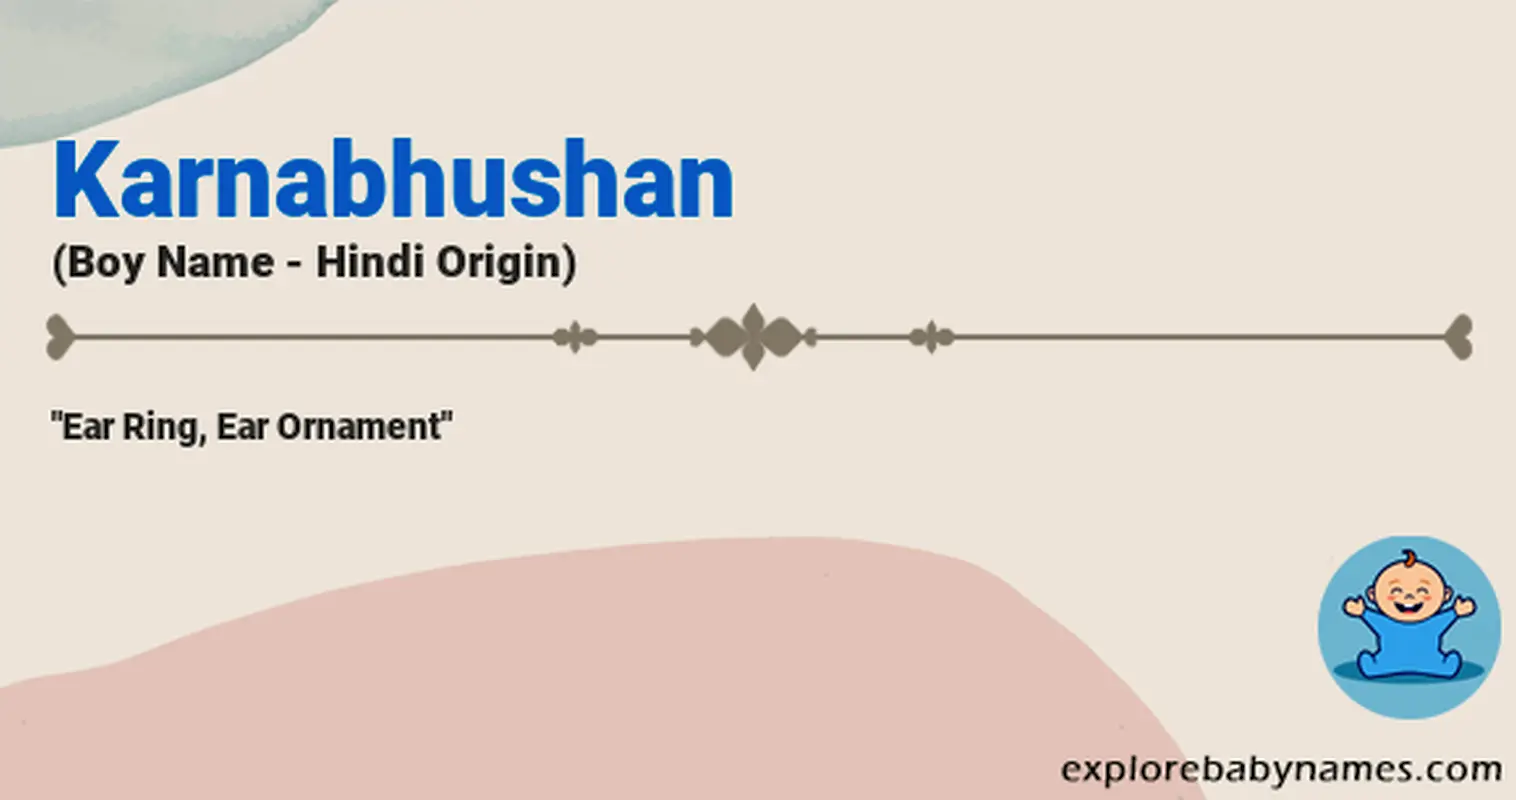 Meaning of Karnabhushan